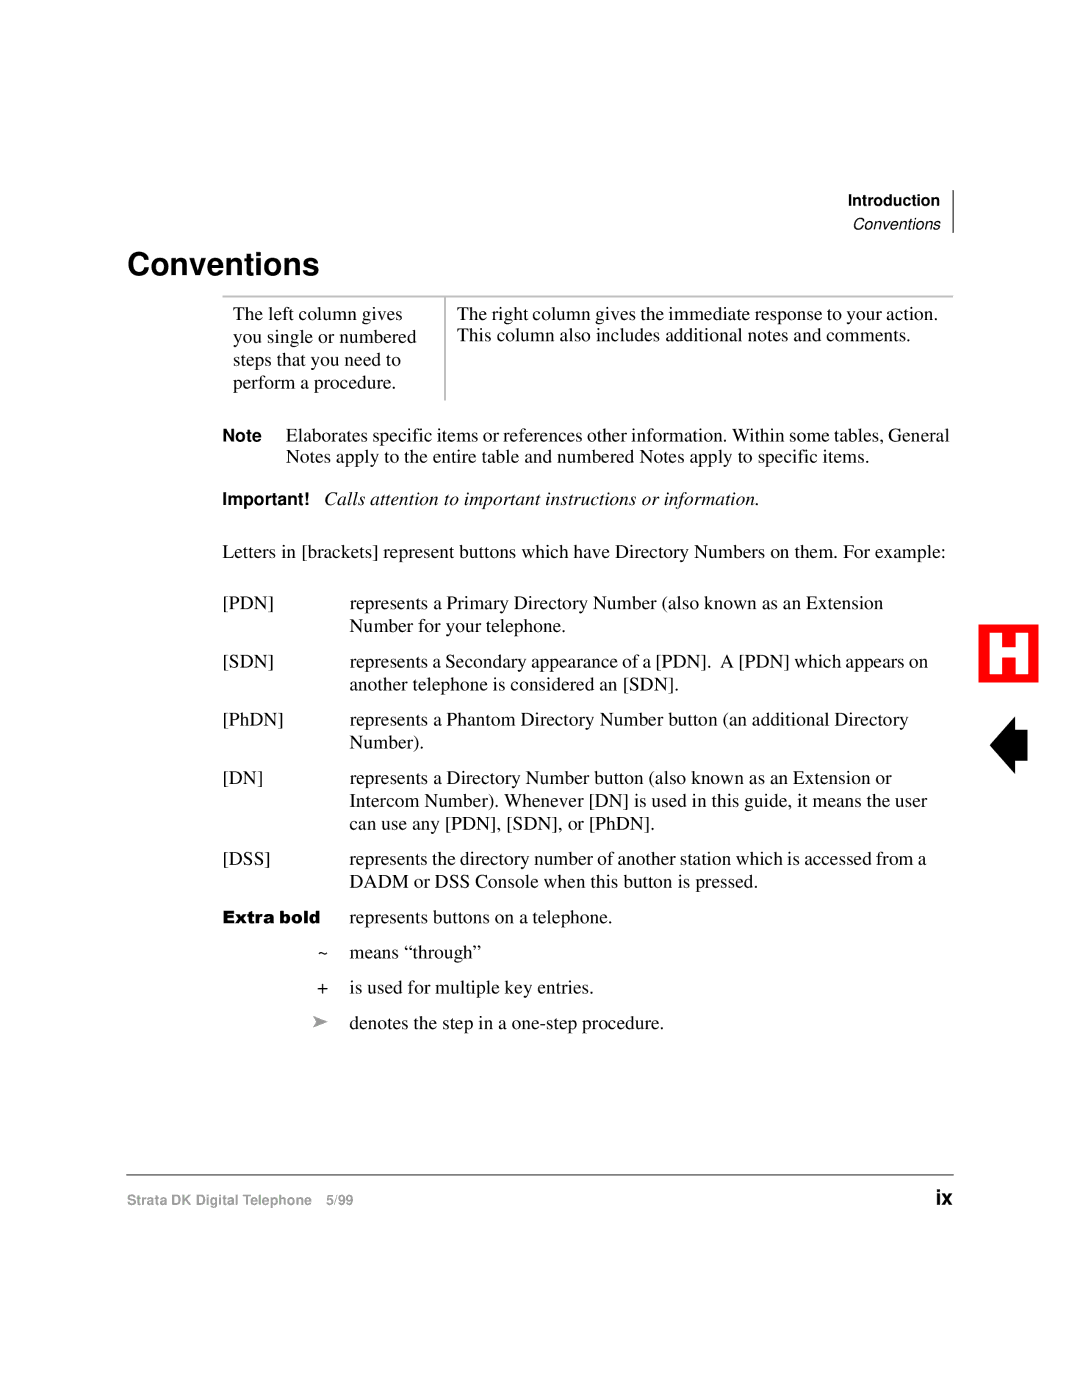 Toshiba Digital Telephone manual Conventions, Sdn 